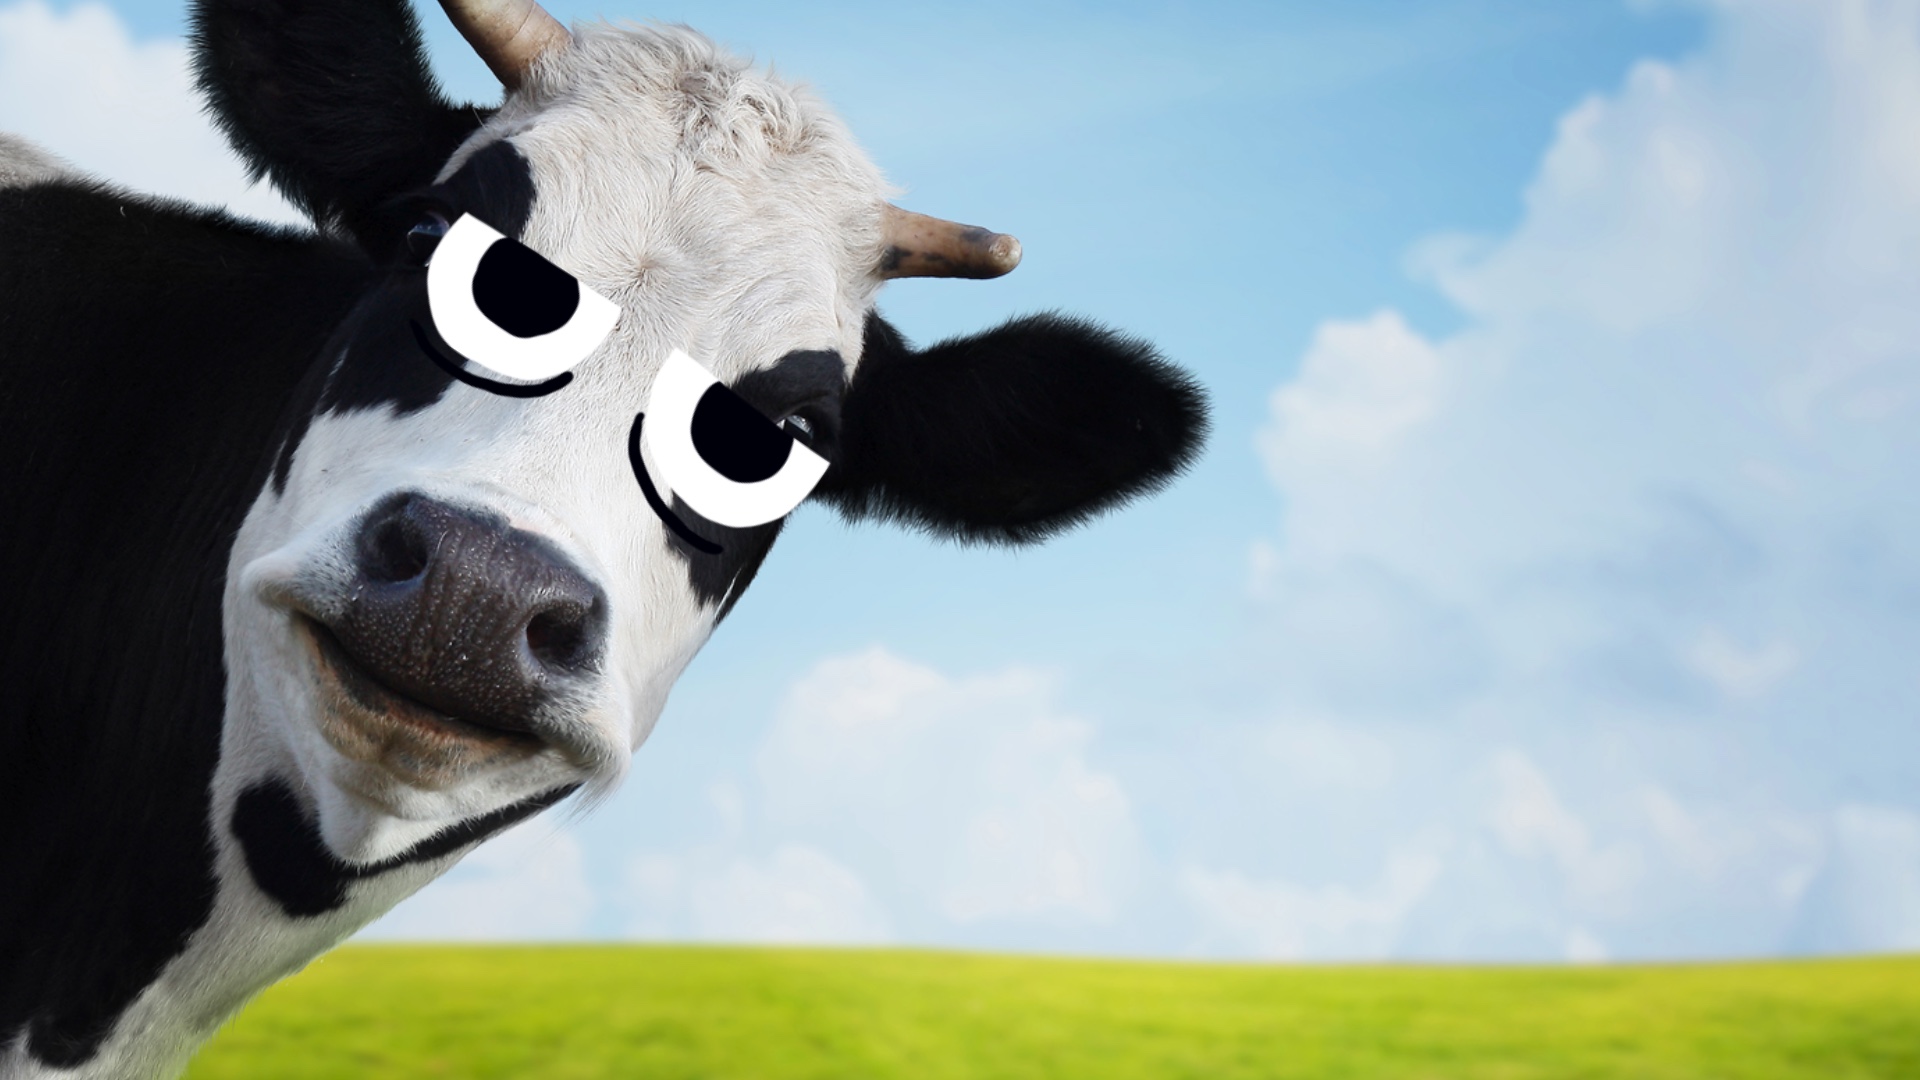 A curious cow